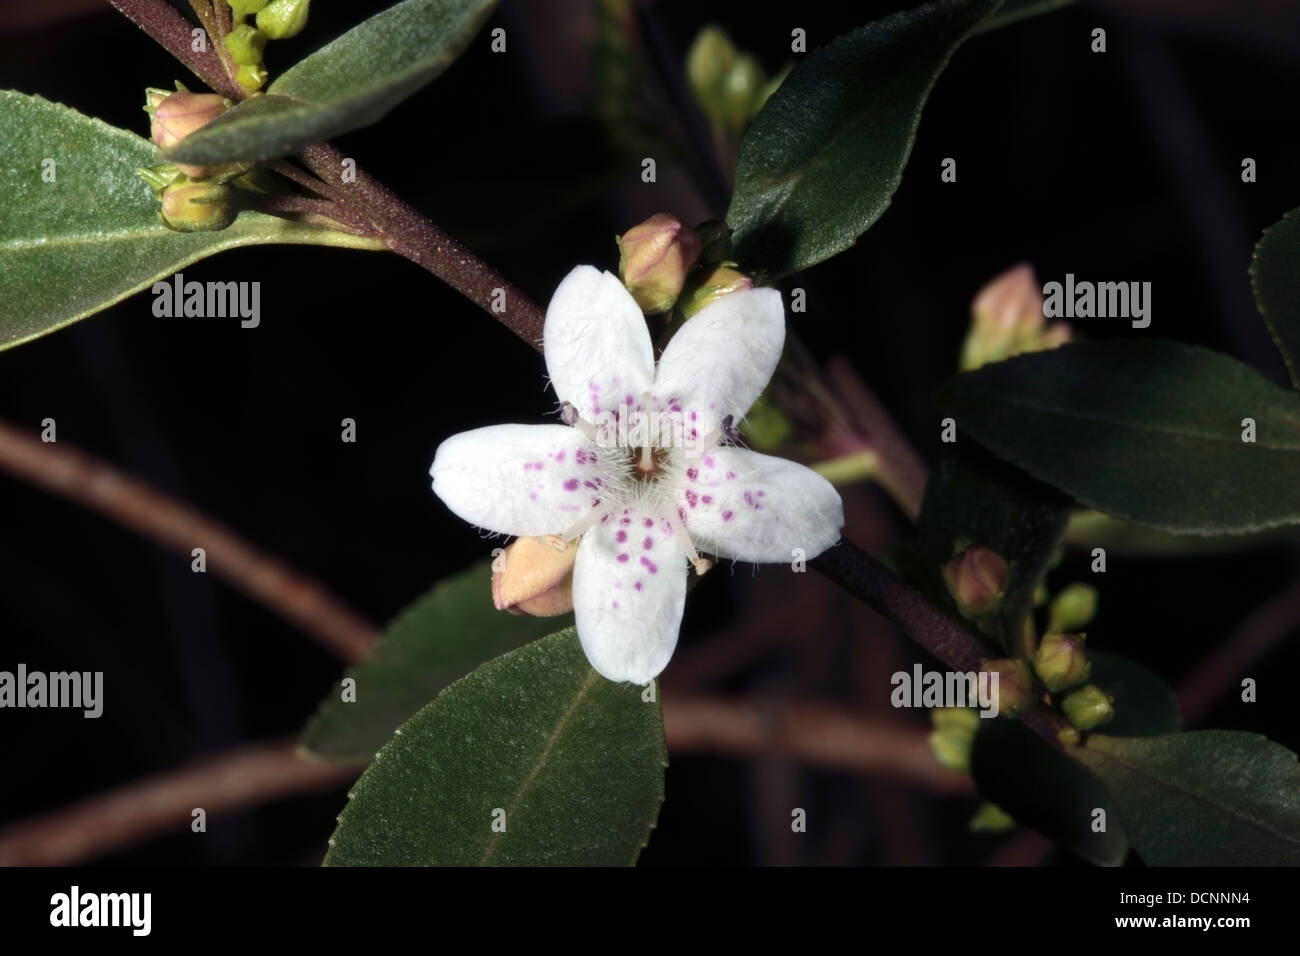 Close-up of flowers of the native South Australian Sticky Boobialla shrub- Myoporum viscosum - Family Scrophulariaceae Stock Photo